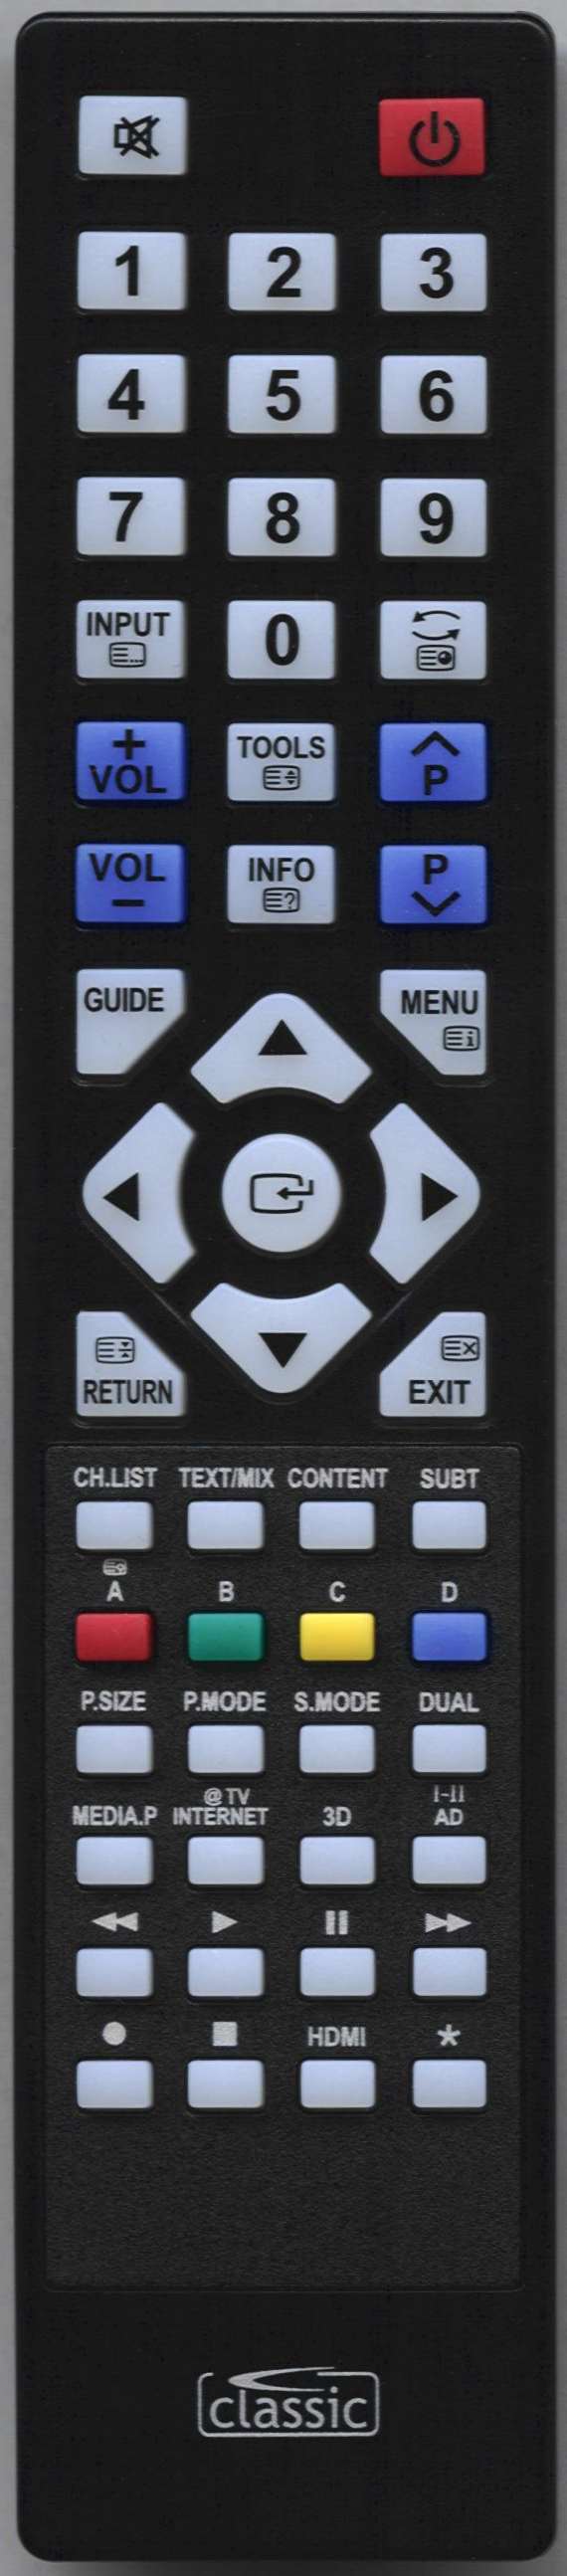 SAMSUNG UE46C8000XWXTK Remote Control